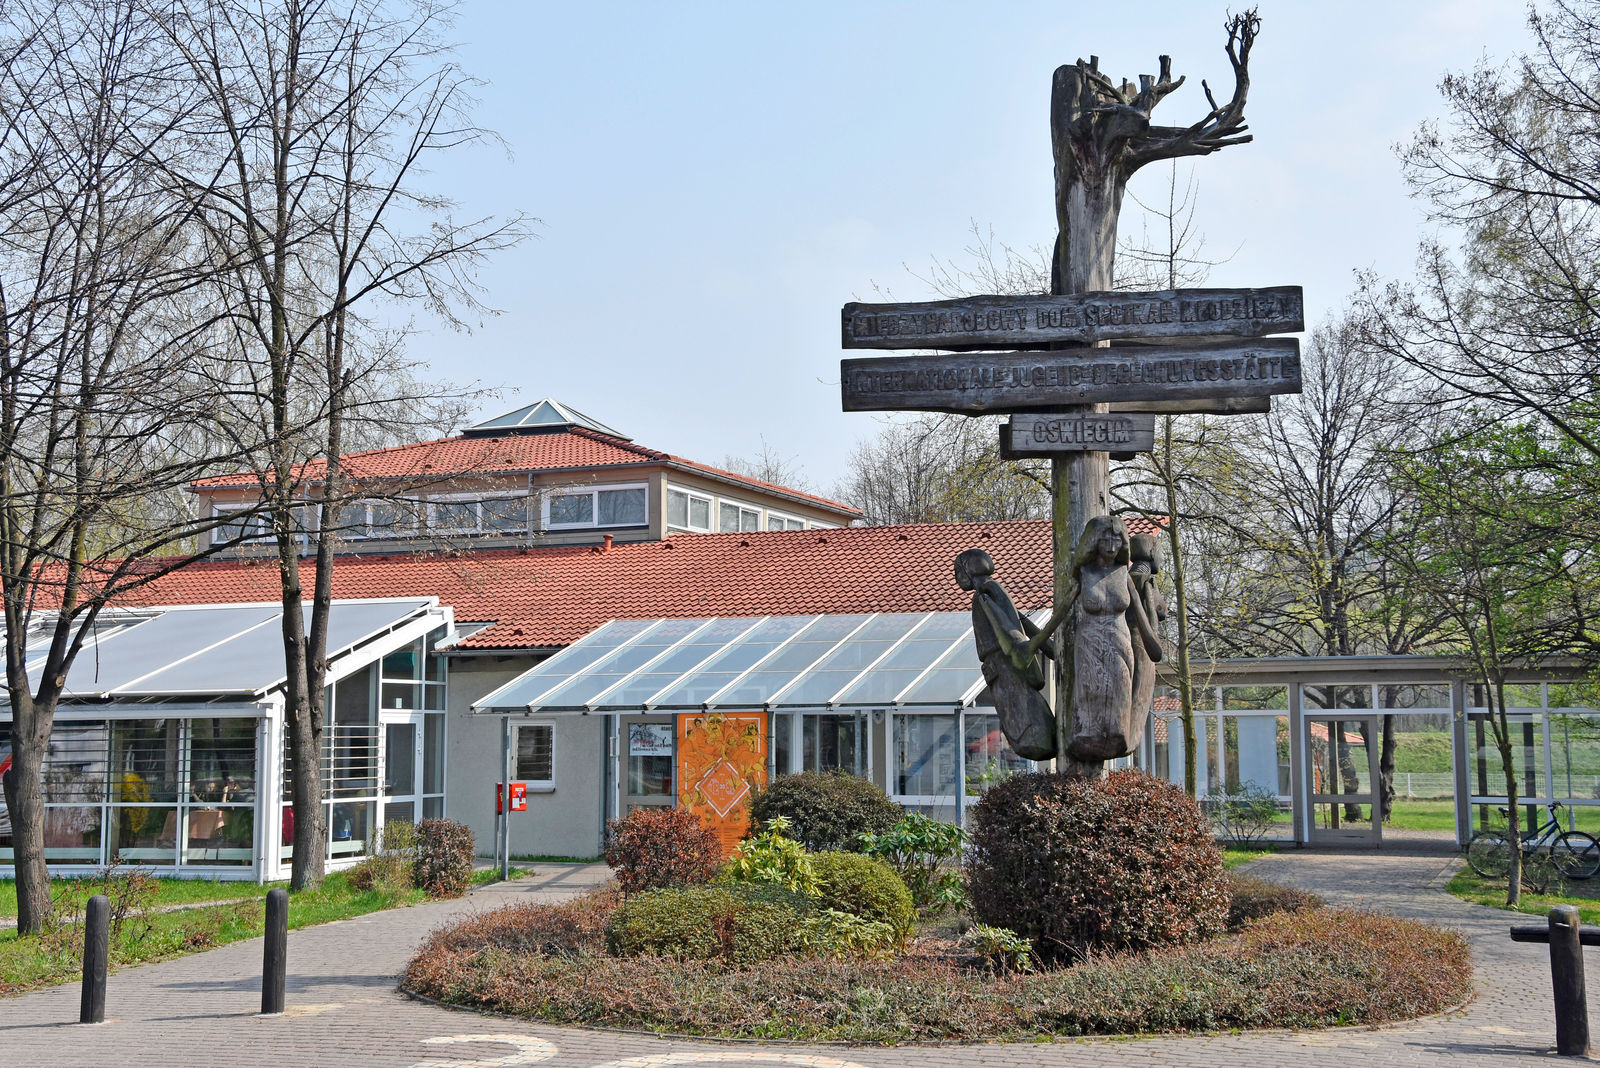 The Entrance to the International Youth Meeting Center Oświęcim/Auschwitz (Poland)